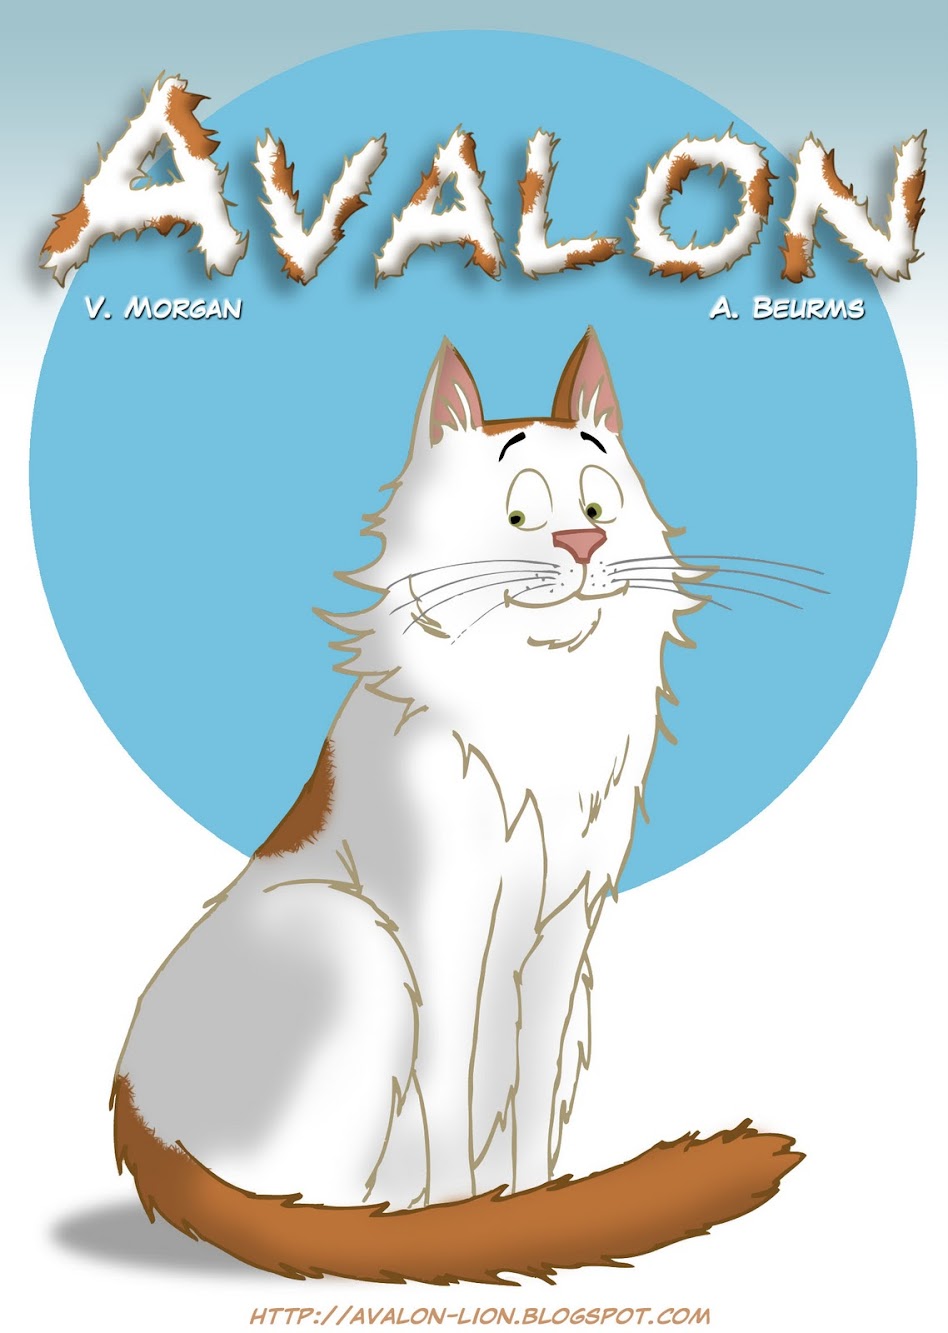 Make A New Friend Tuesdays: Avalon